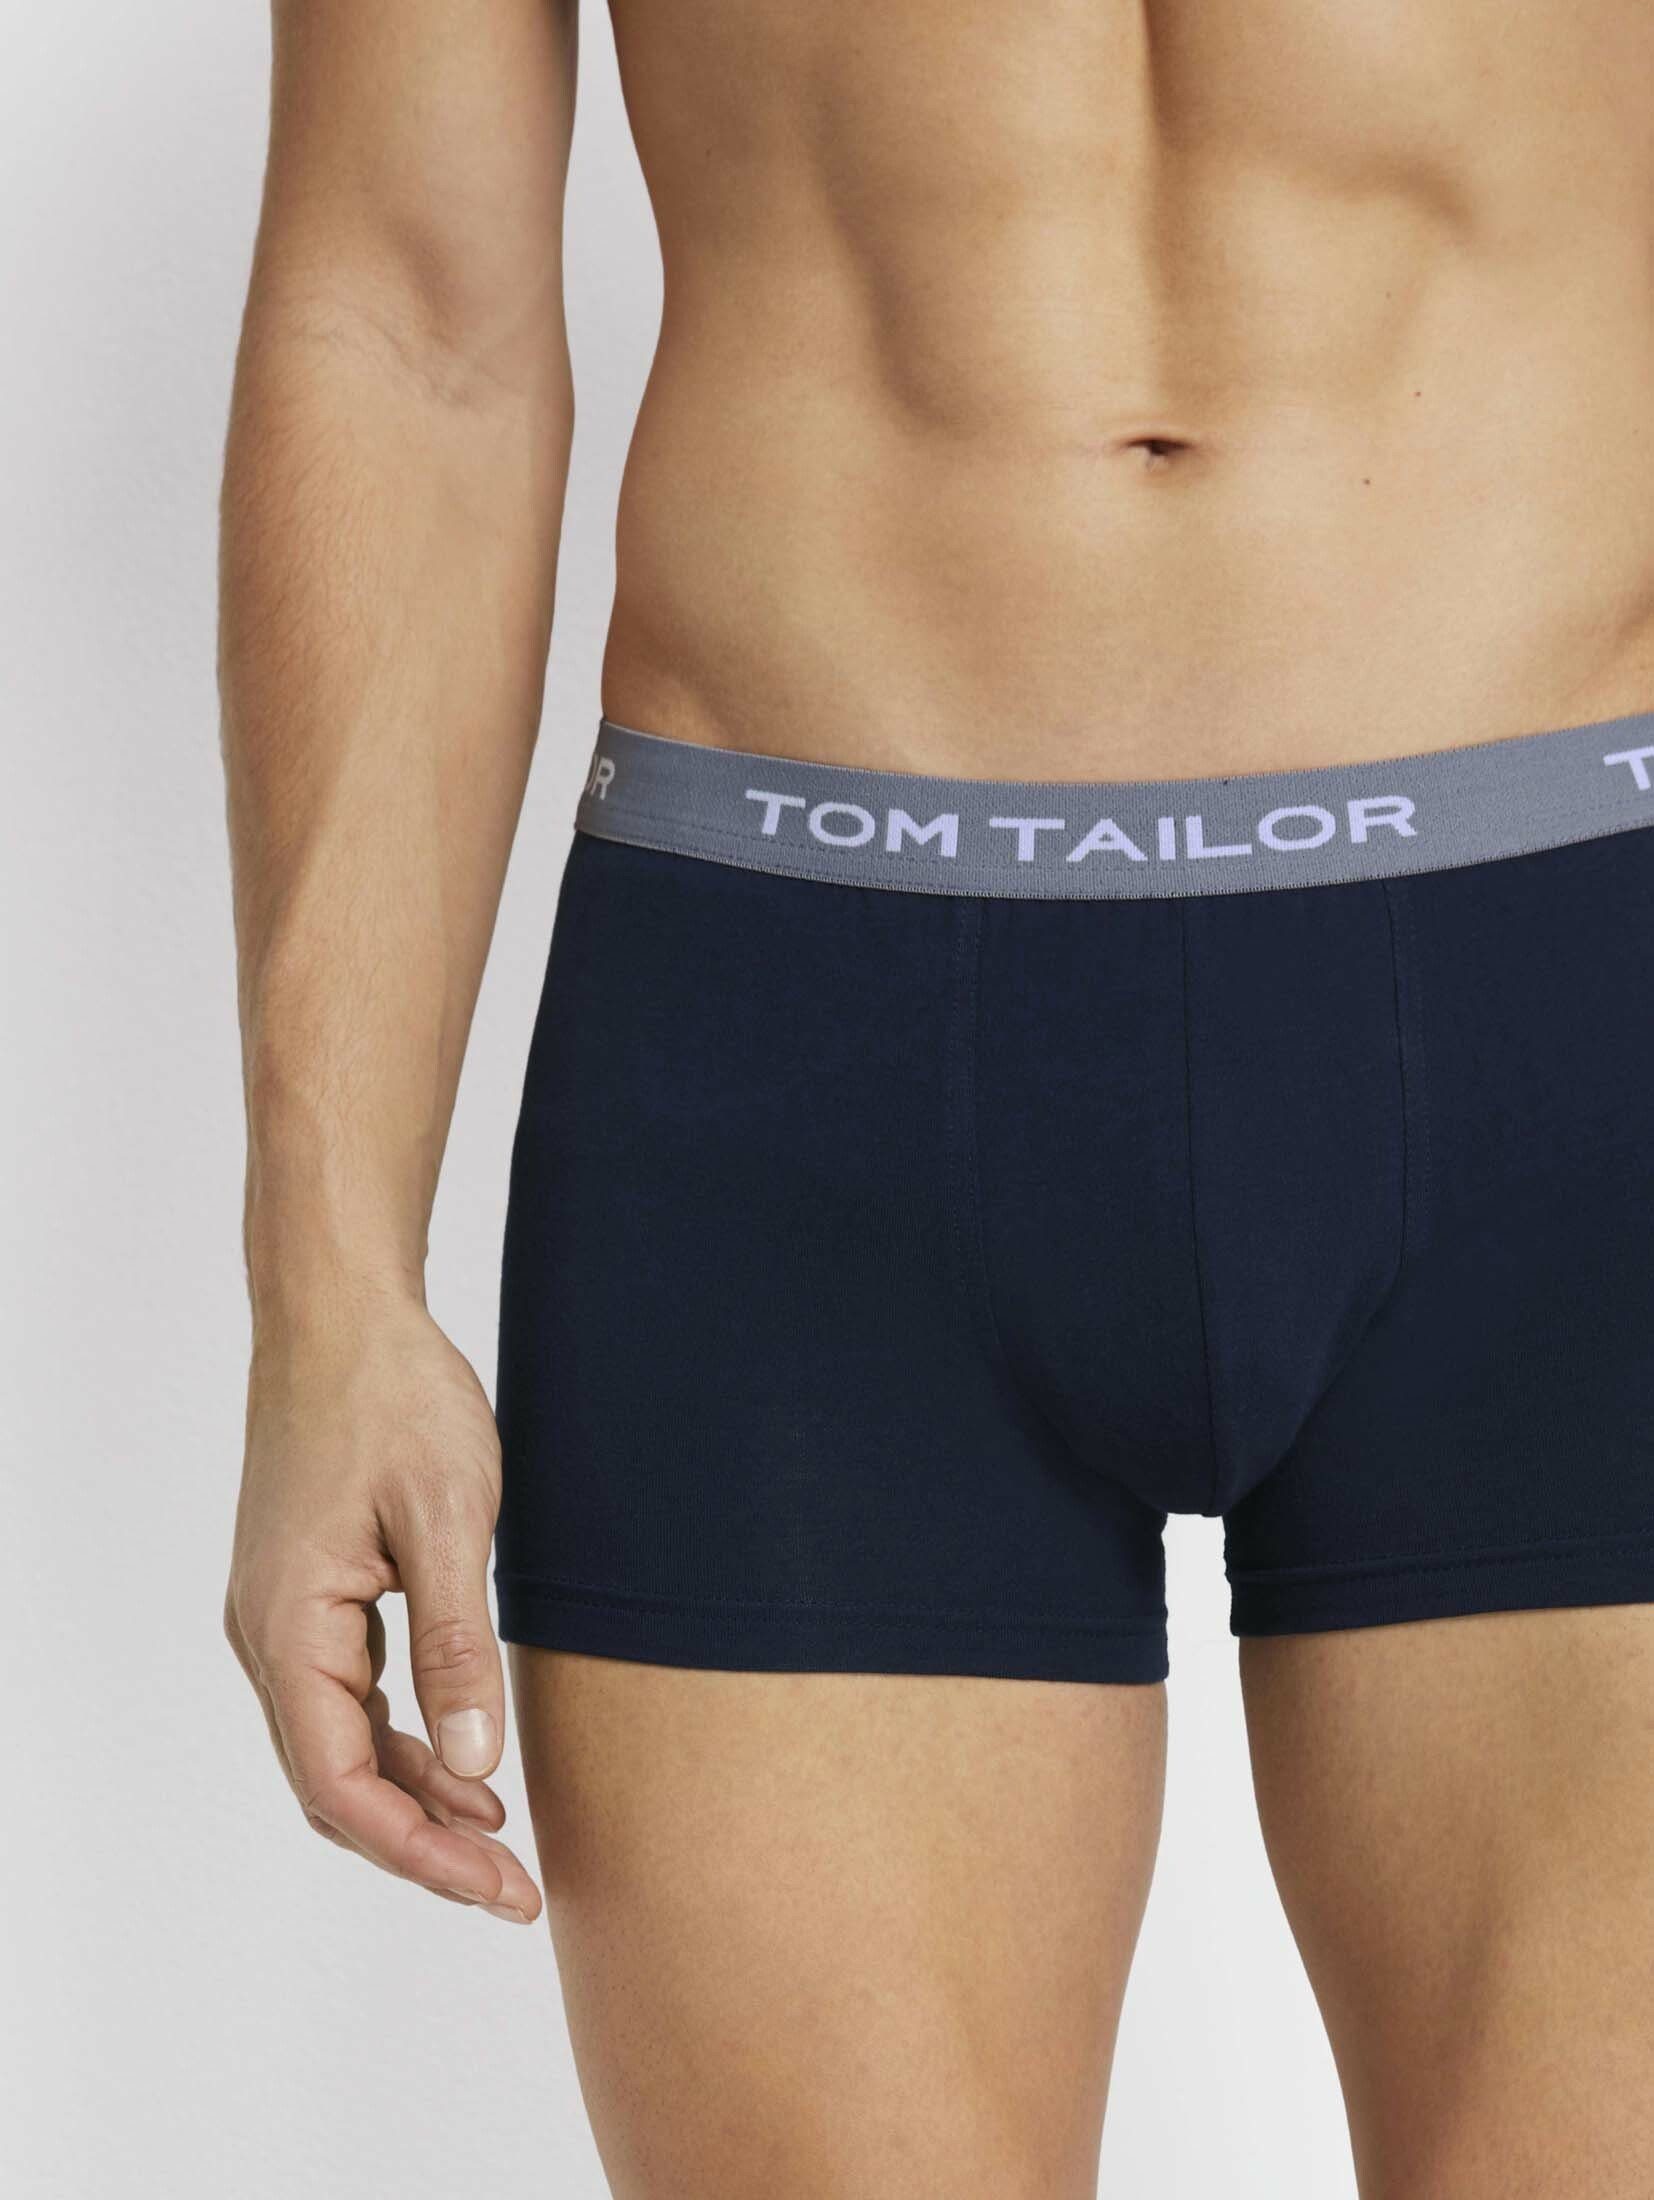 TOM TAILOR Boxershorts Hip-Pants dark im Dreierpack multi (im Dreierpack) blue